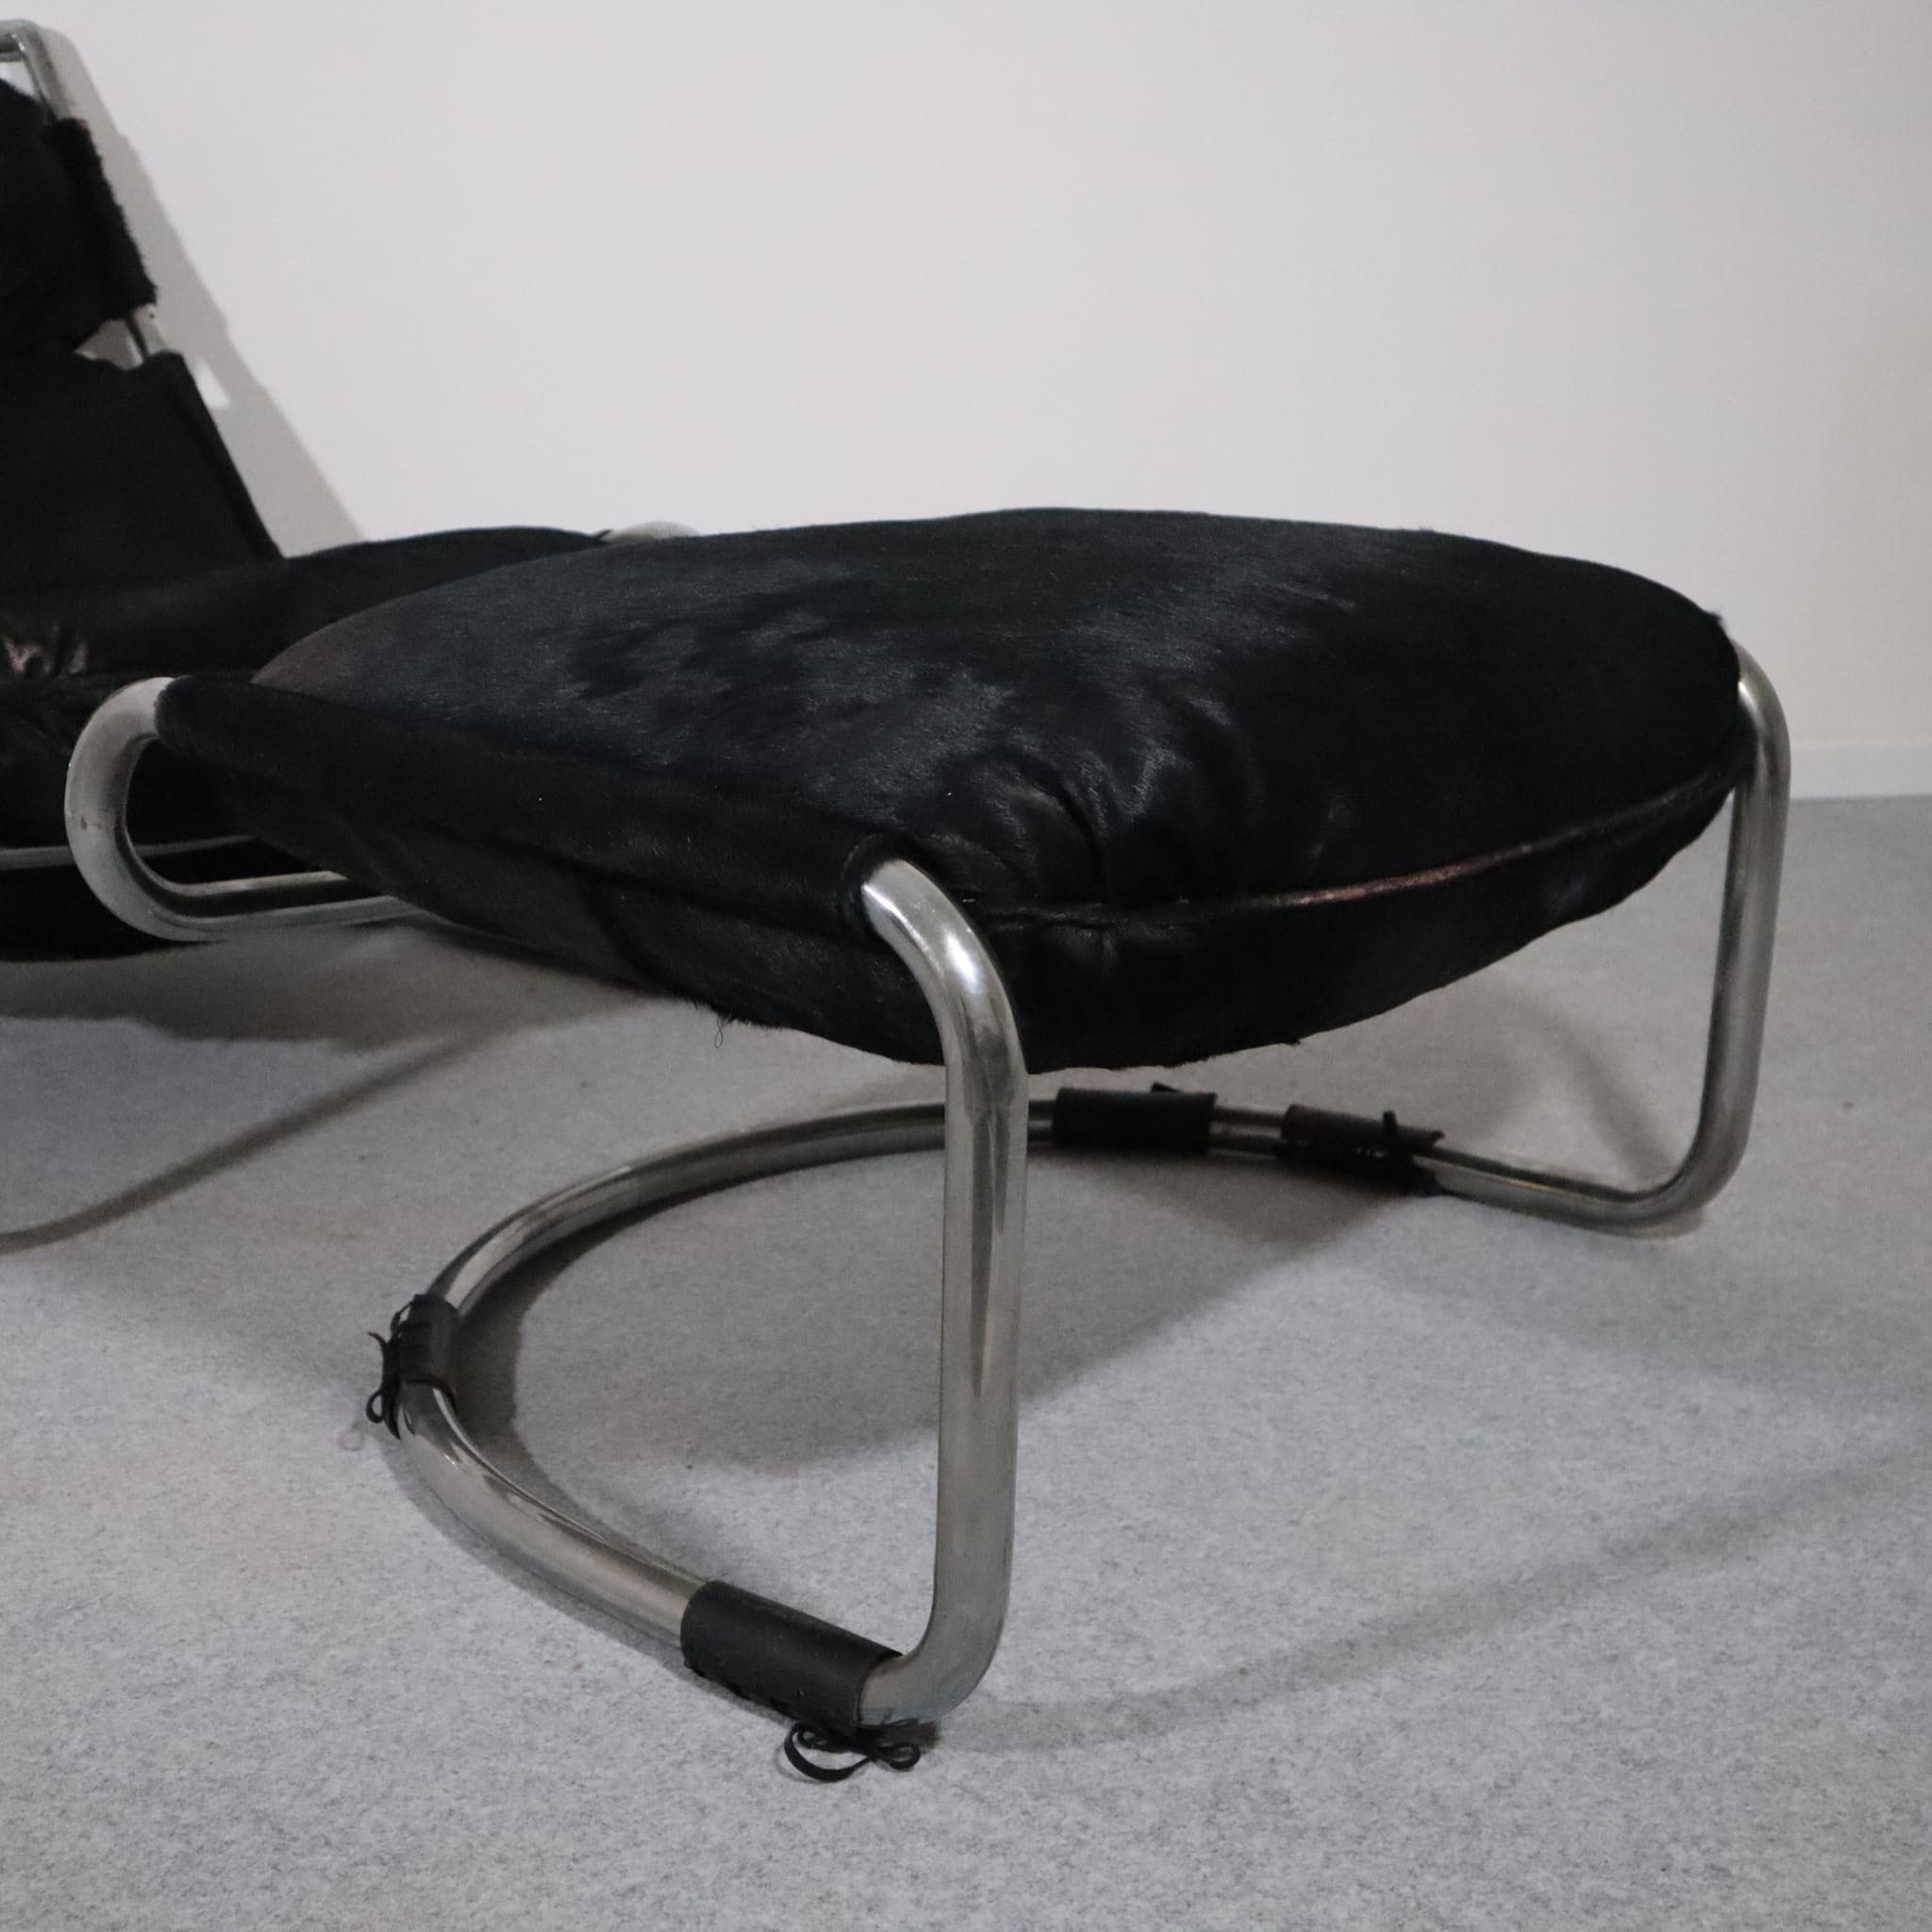 visioni-visionidepoca-depoca-horse-leather-armchair-ottoman-steel-70s-furnishings-modern-vintage-design-italy